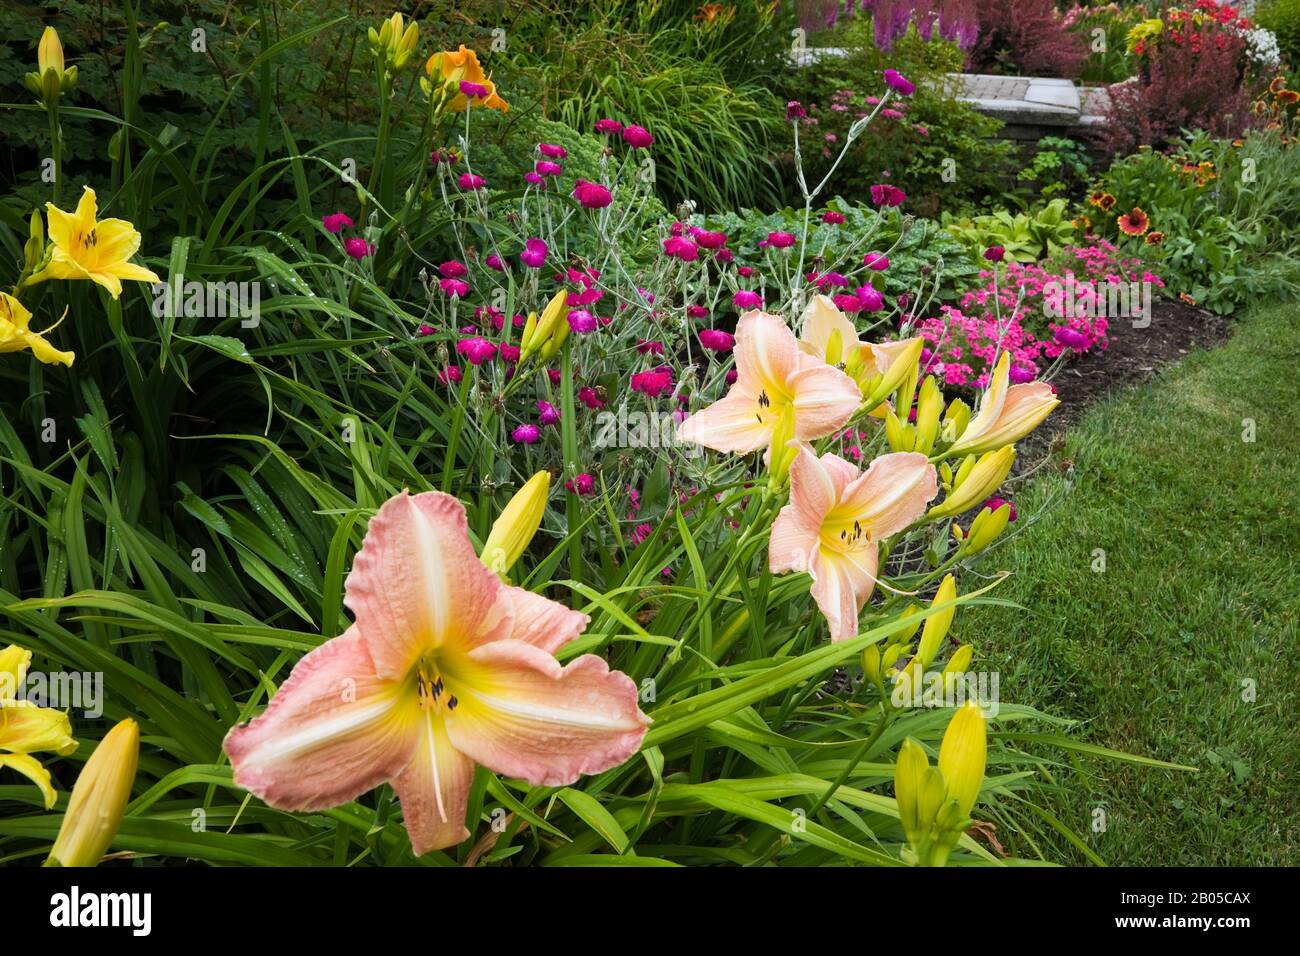 Border with perennial flowers such as  yellow, pink, white Hemerocallis - Daylilies, purple Phlox, Berberis thunbergii 'Rose Glow' - Japanese Barberry. Stock Photo